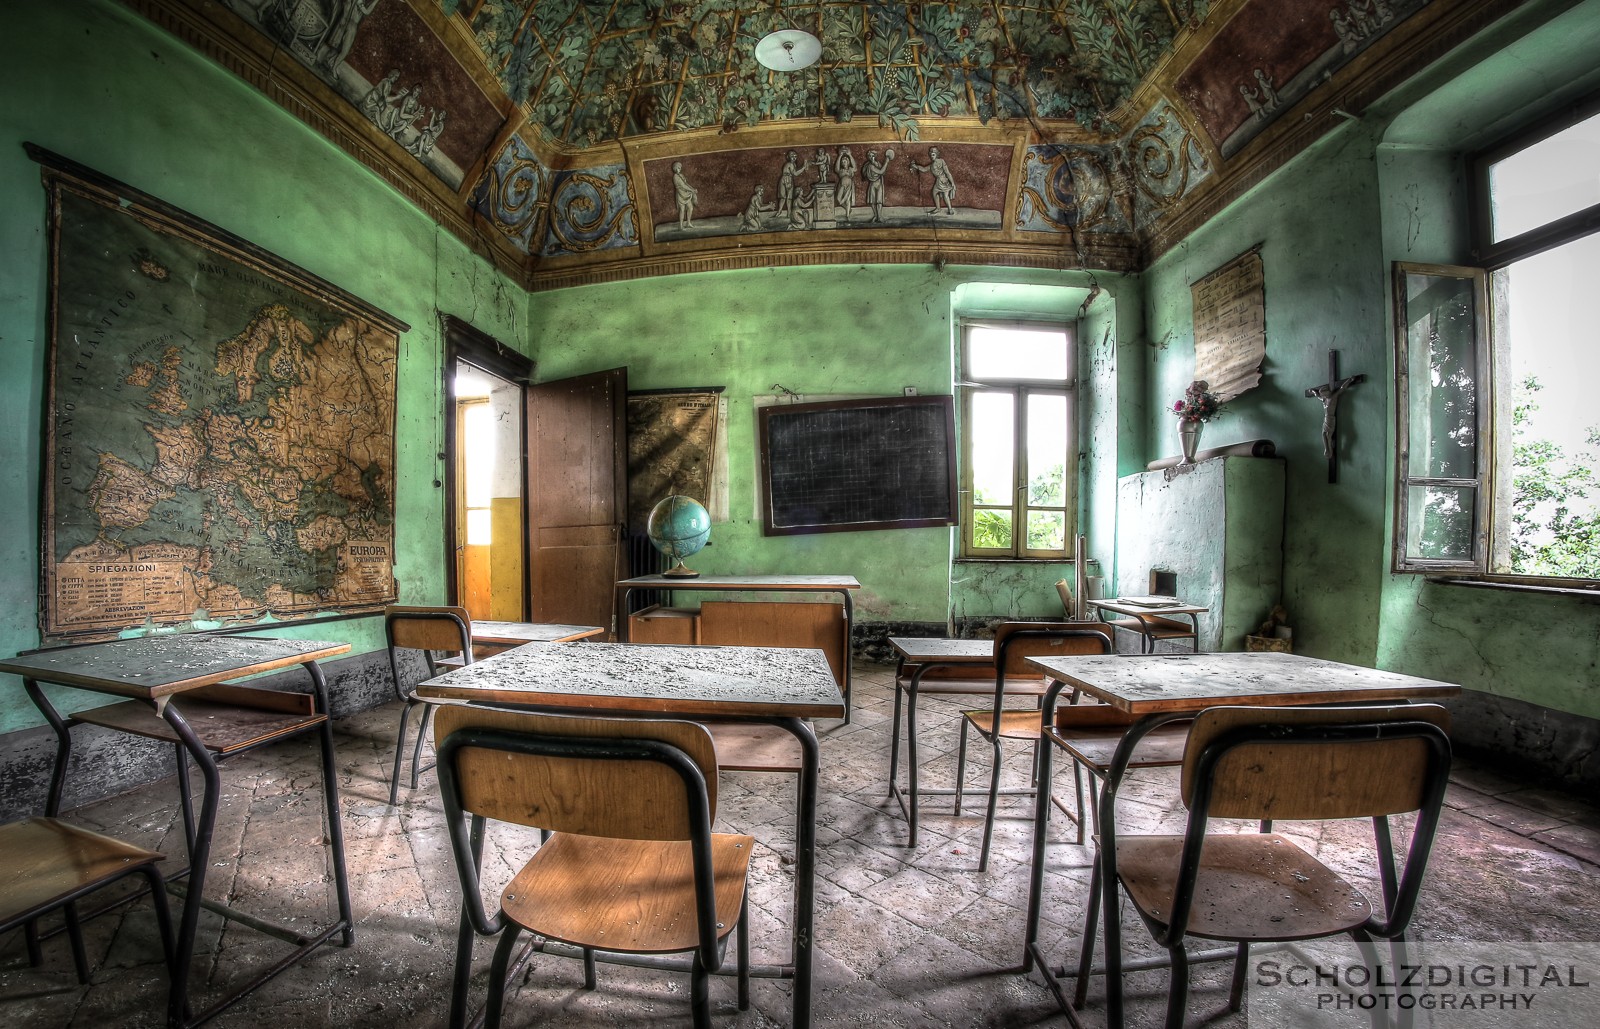 Lezione die Geografia - verlassene Schule int Italien ein Lost Place - urbex